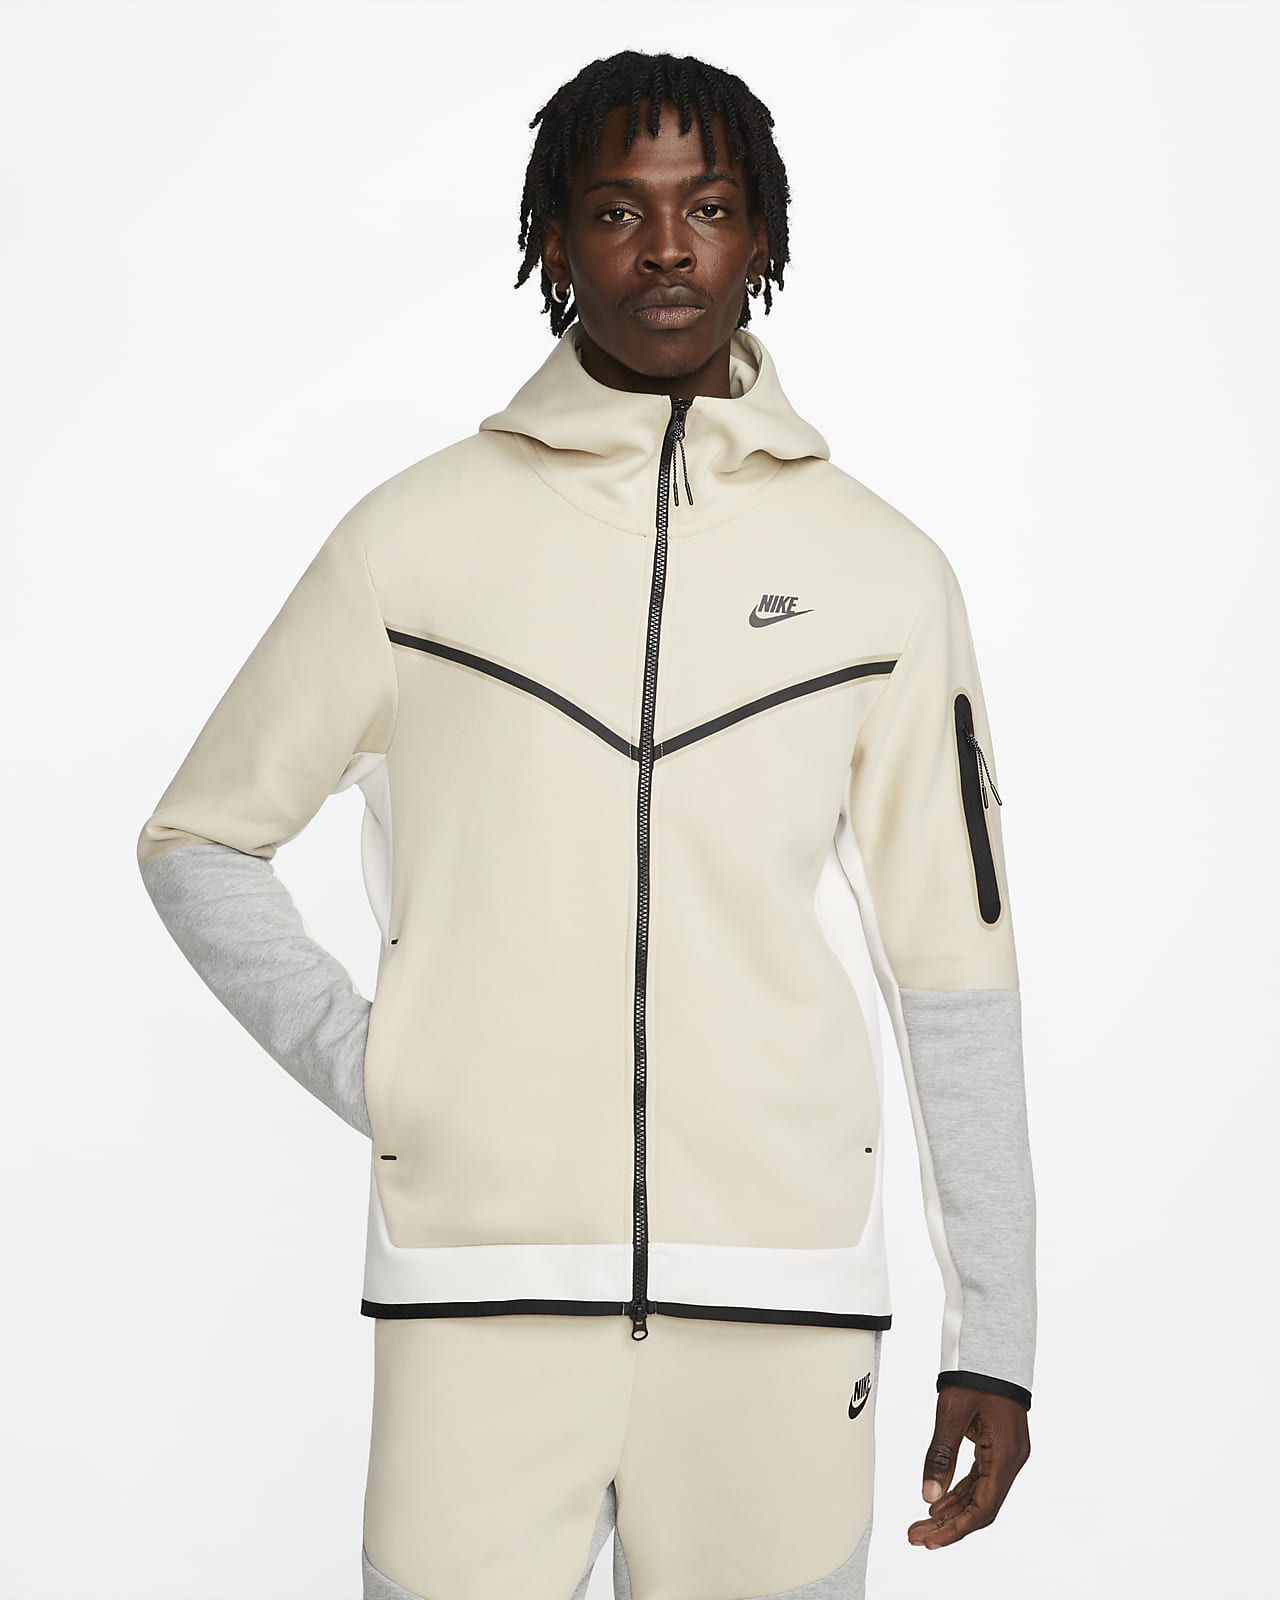 Manifiesto sentido común Contribuyente Nike Sportswear Tech Fleece Sudadera con capucha con cremallera completa -  Hombre. Nike ES